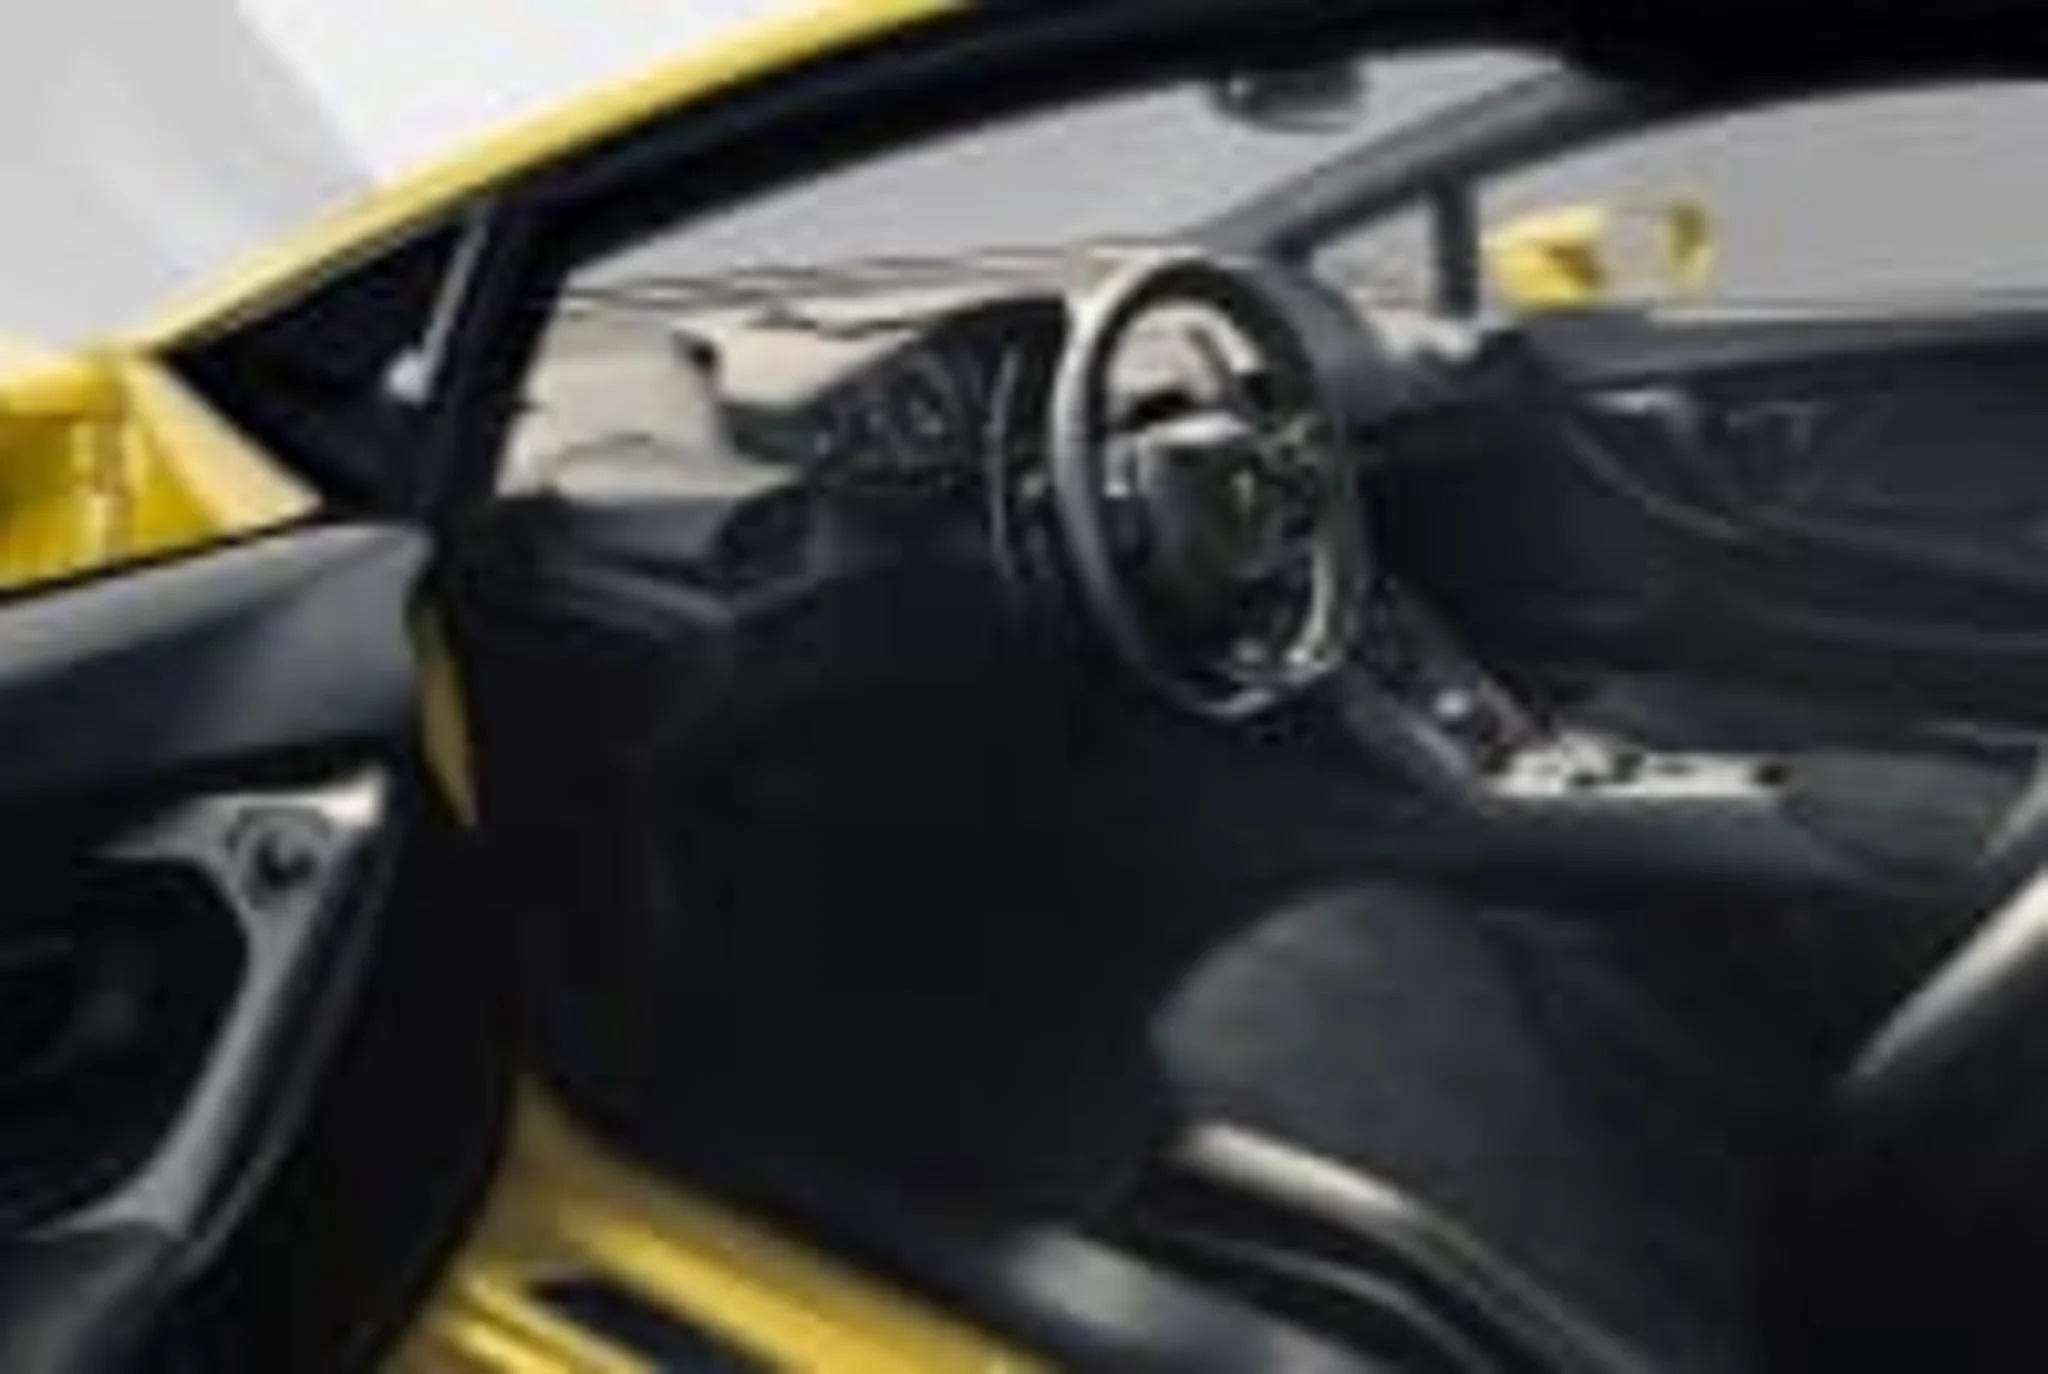 Lamborghini Huracan interior